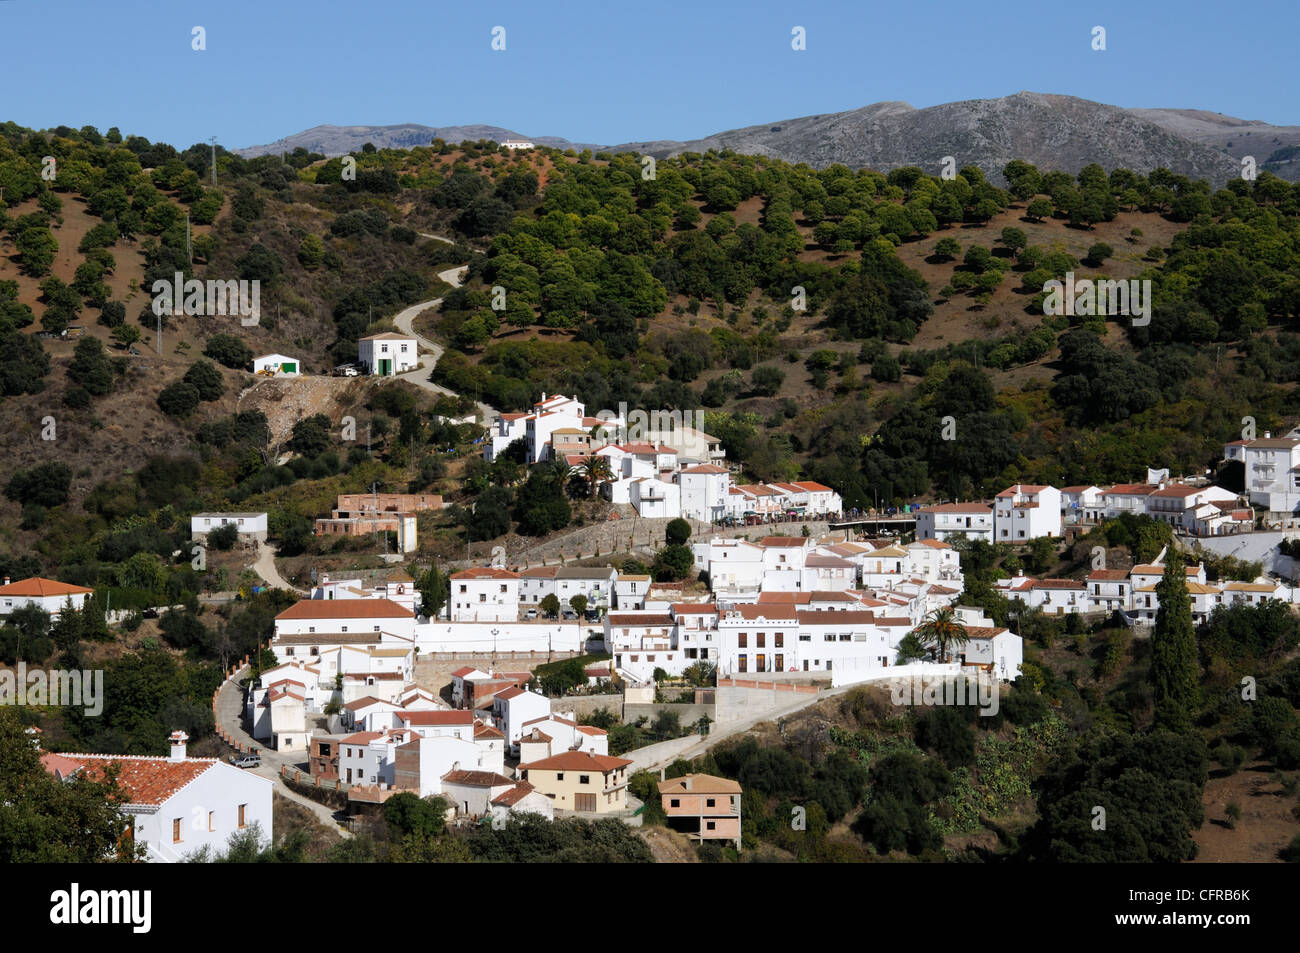 Village surrounded by trees, Juzcar, Serrania de Ronda, Malaga Province, Andalucia, Spain, Western Europe. Stock Photo